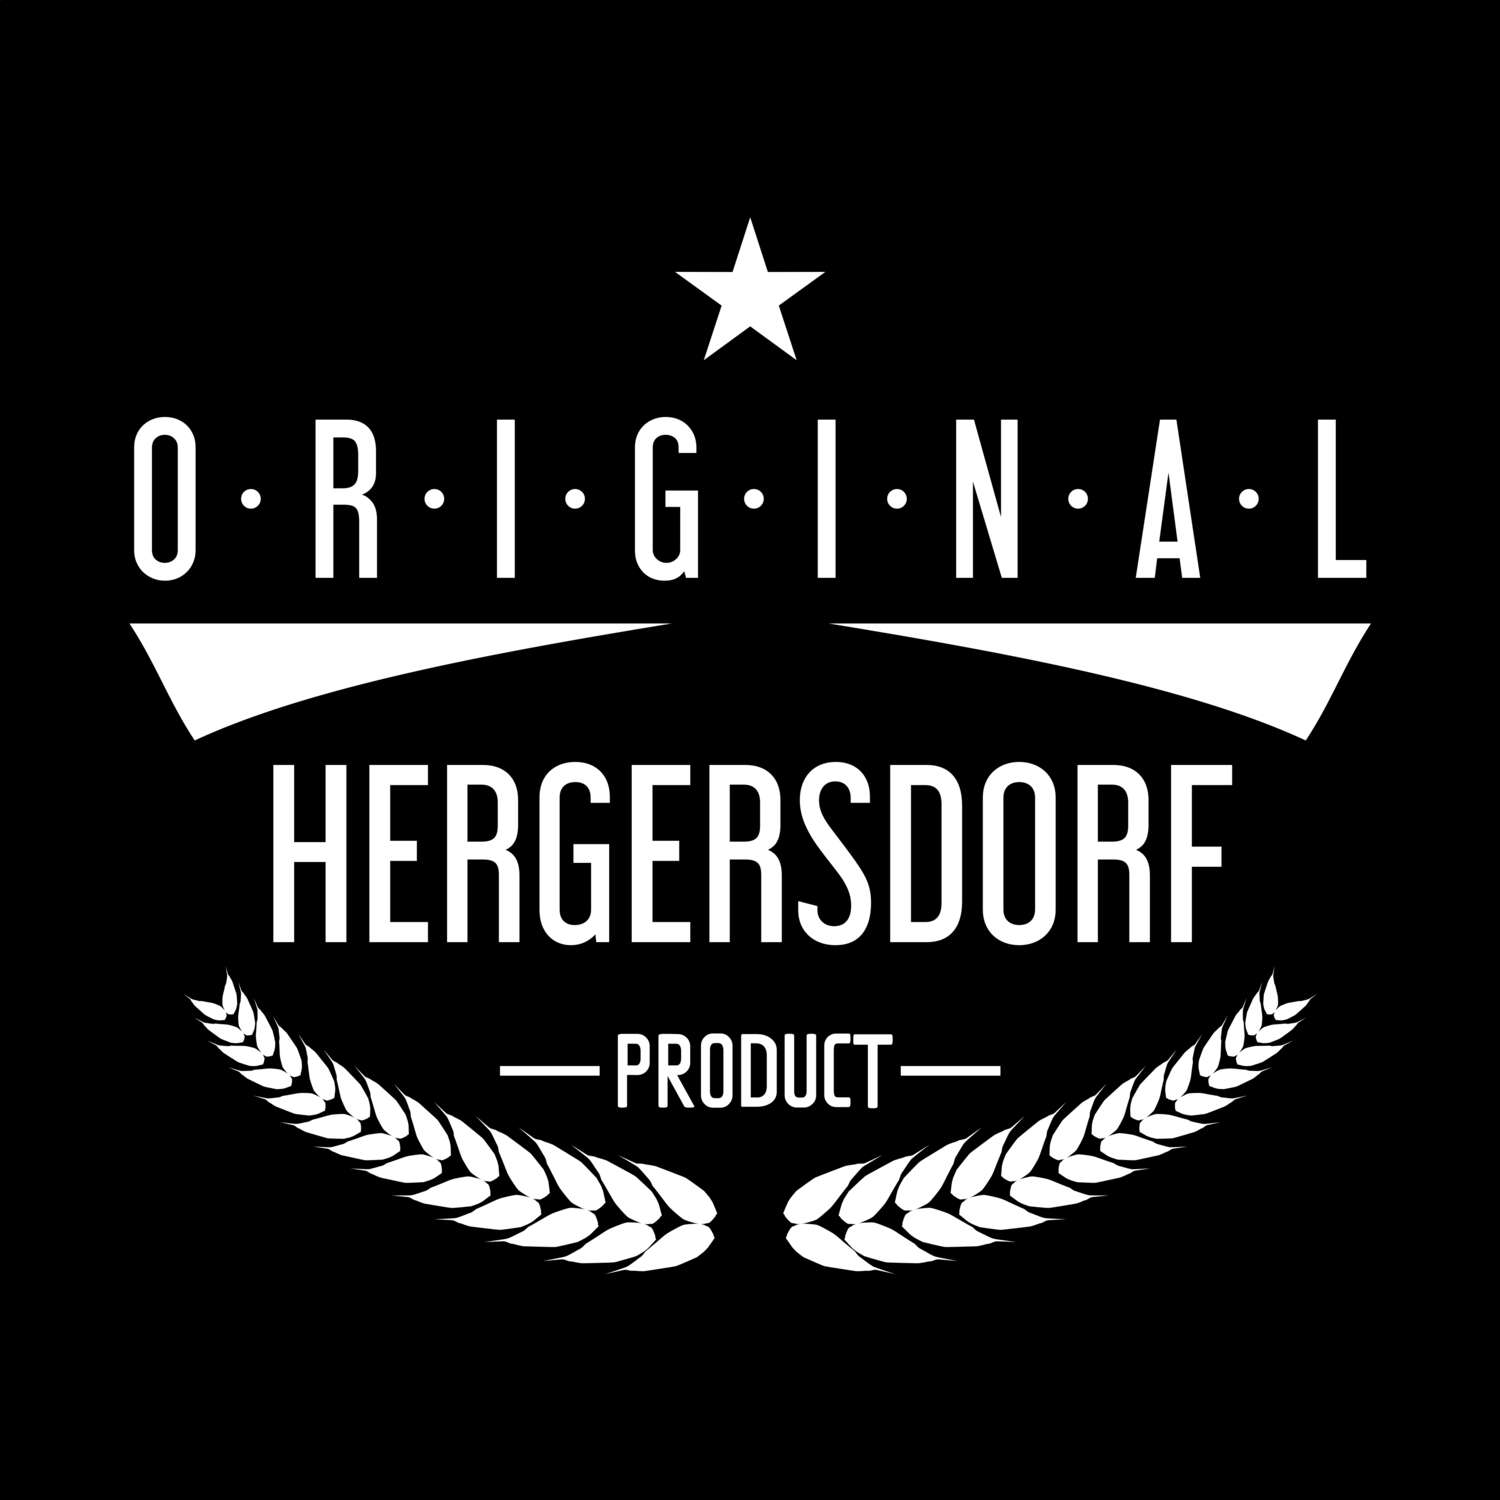 Hergersdorf T-Shirt »Original Product«